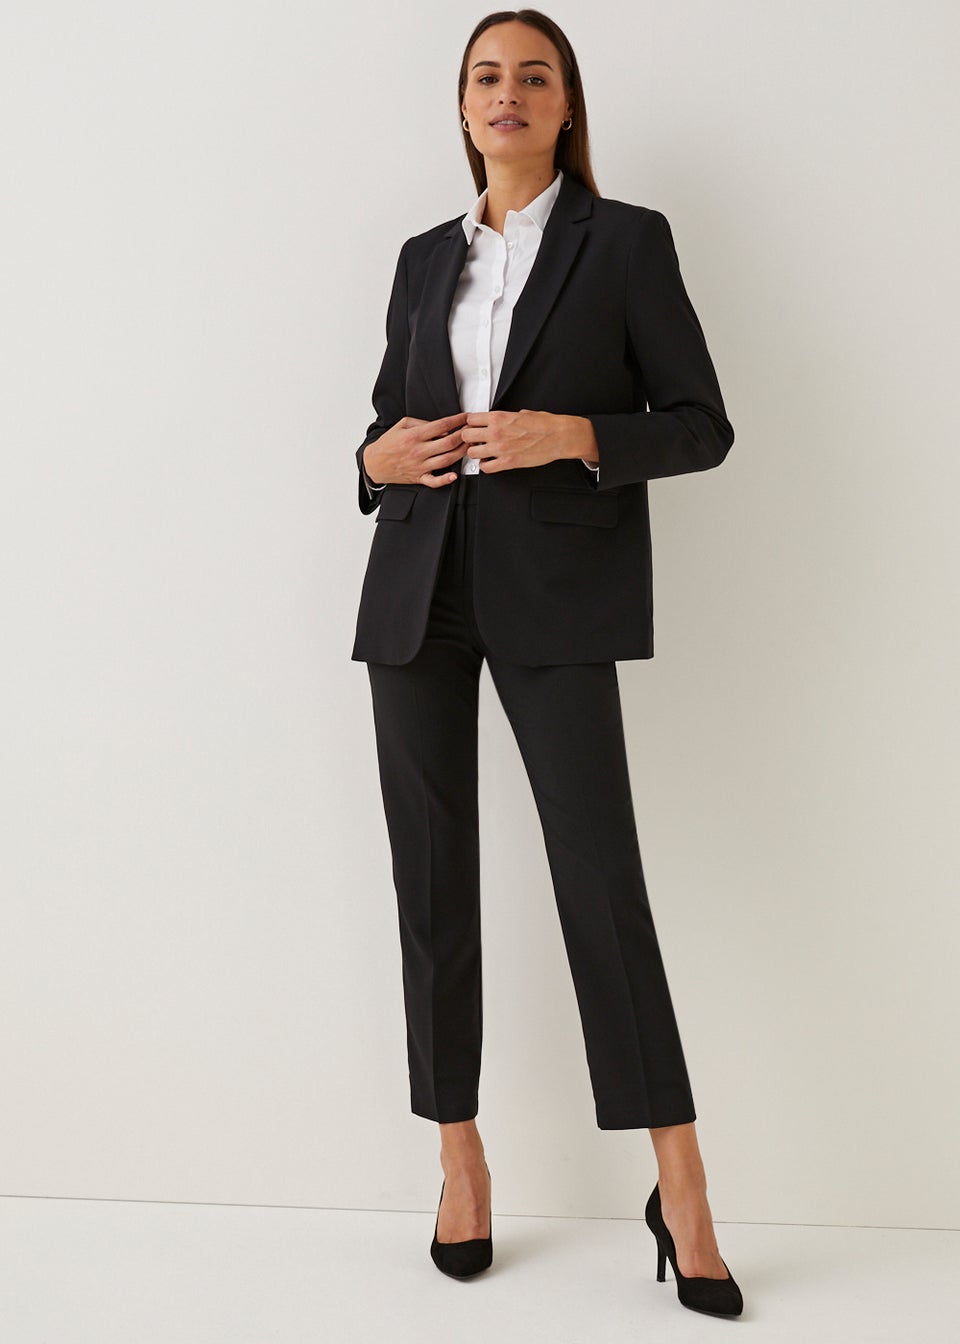 MALENE BIRGER - Women's Black Trousers Size Small | eBay-saigonsouth.com.vn